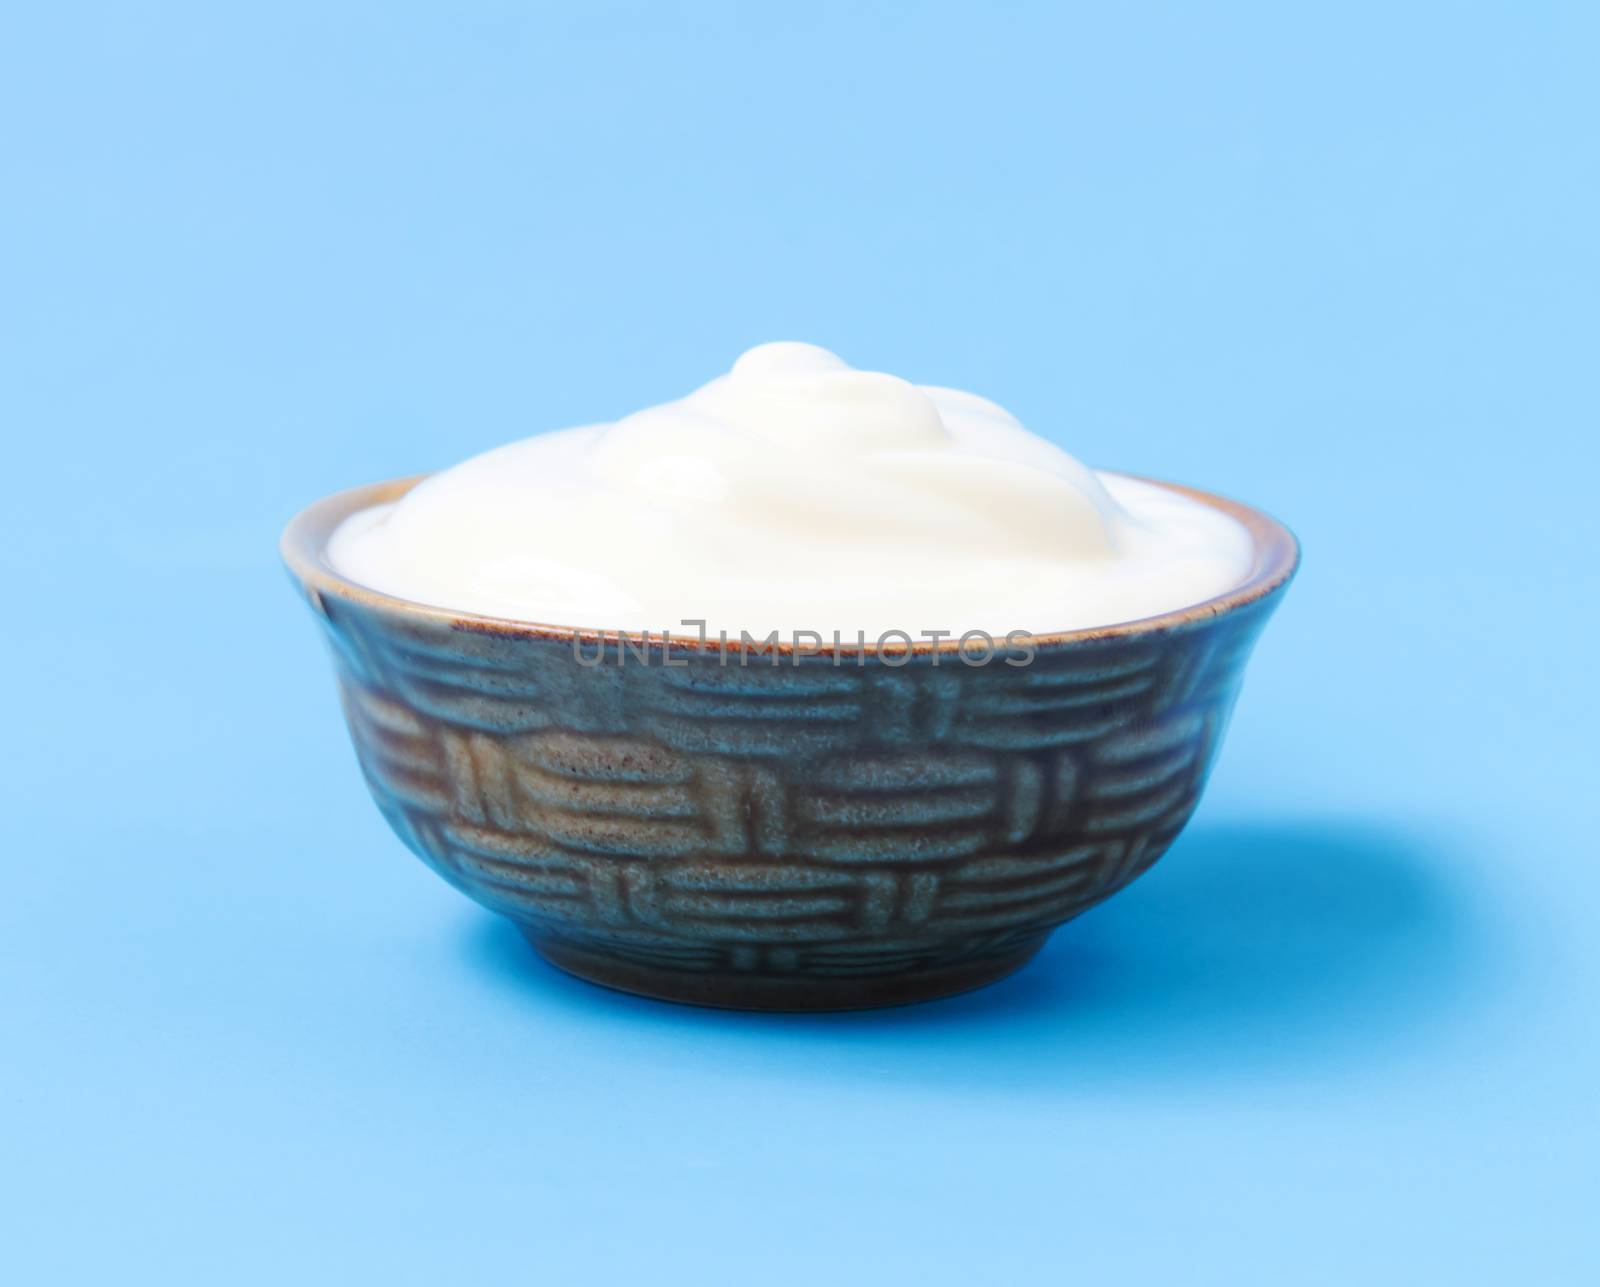 Greek yogurt in bowl with blue background